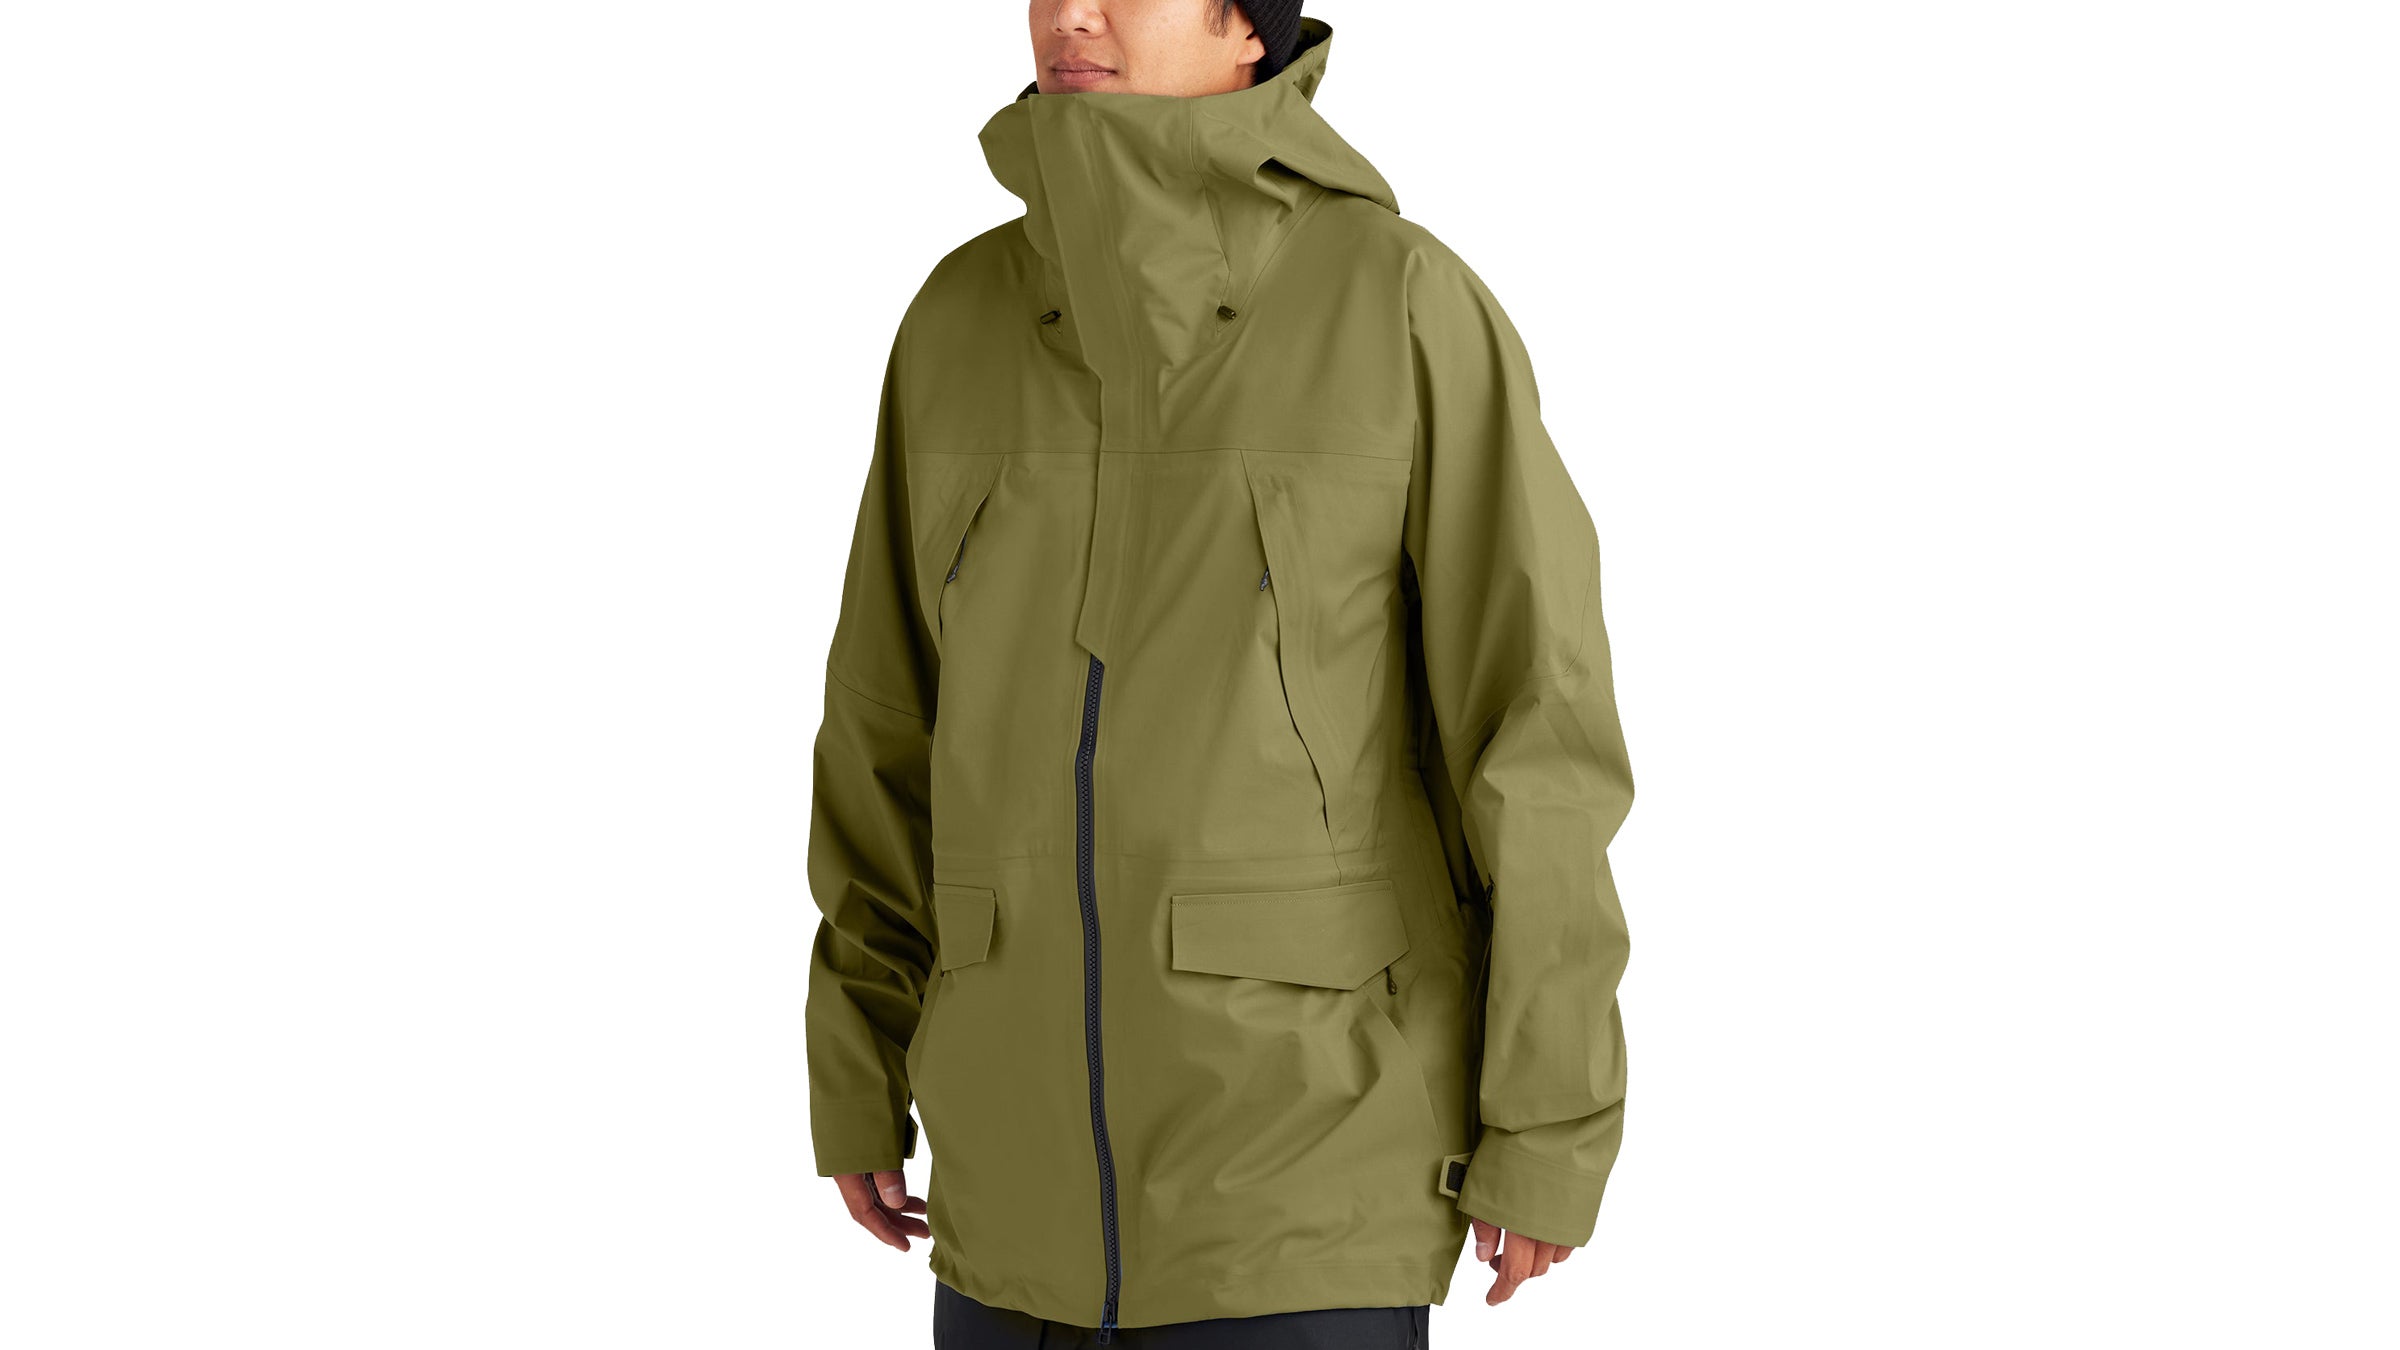 Buy Pooluly Men's Ski Jacket Warm Winter Waterproof Windbreaker Hooded  Raincoat Snowboarding Jackets, Army Green, Small at Amazon.in